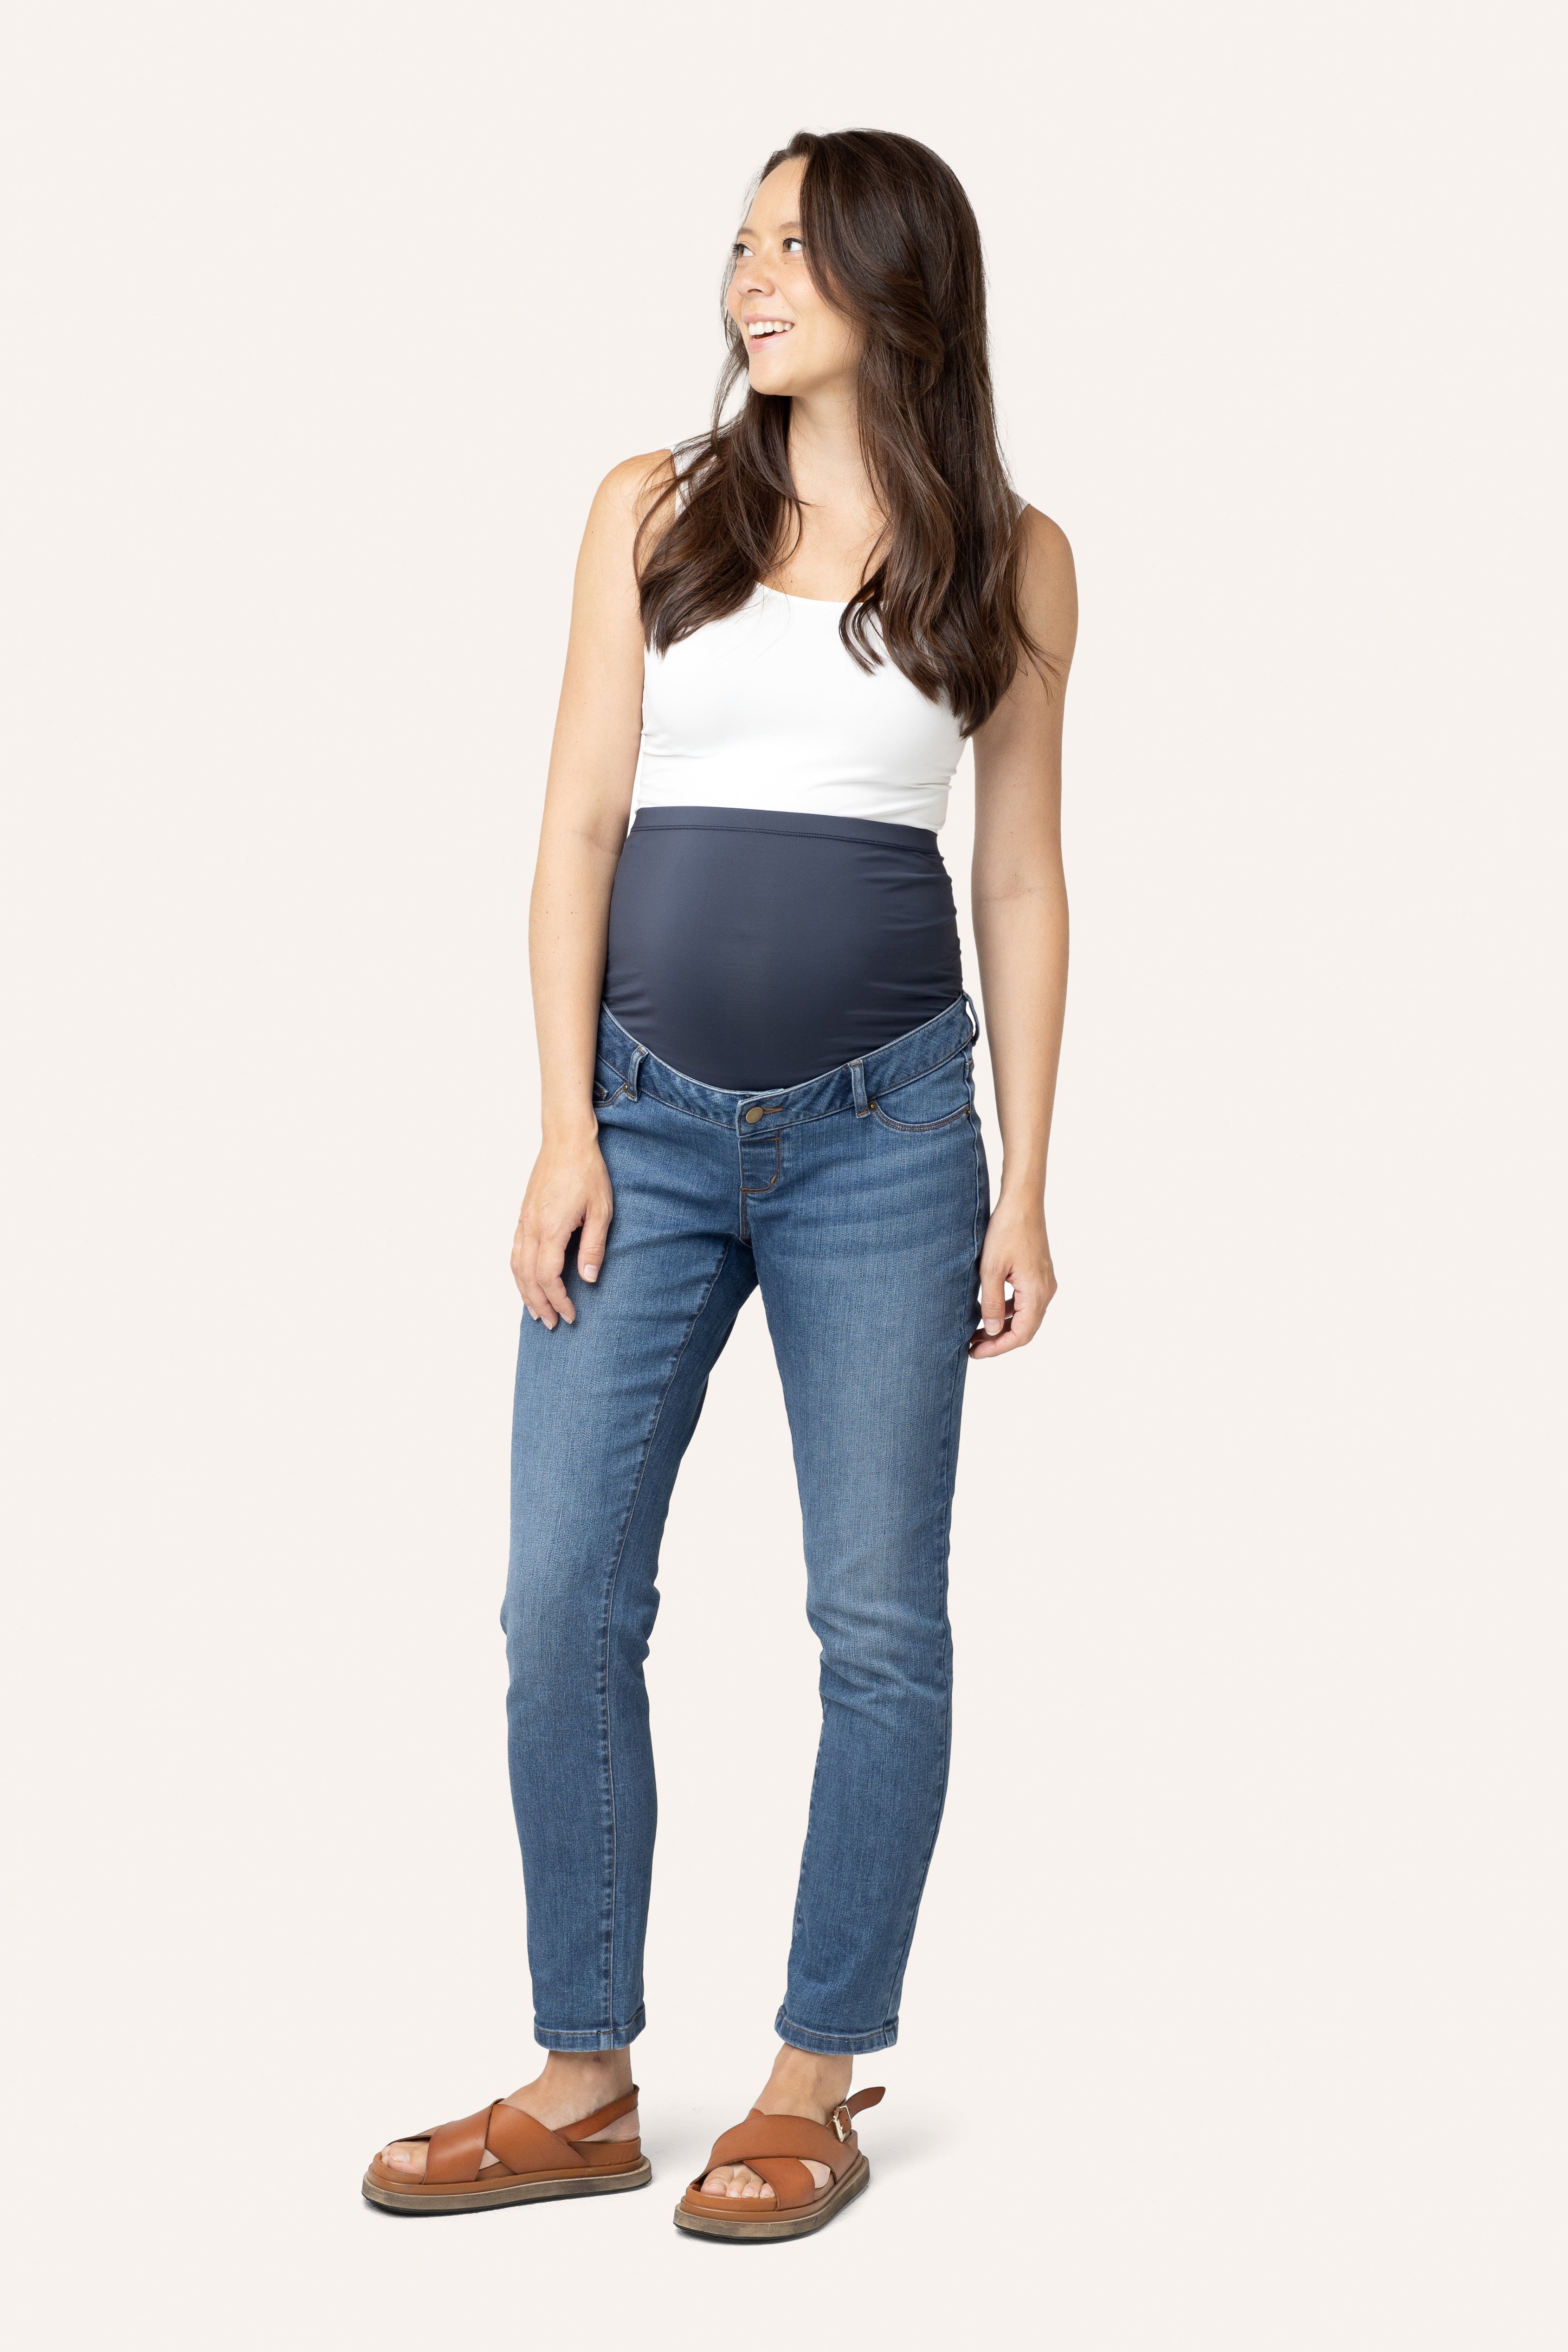 maternity+jeans